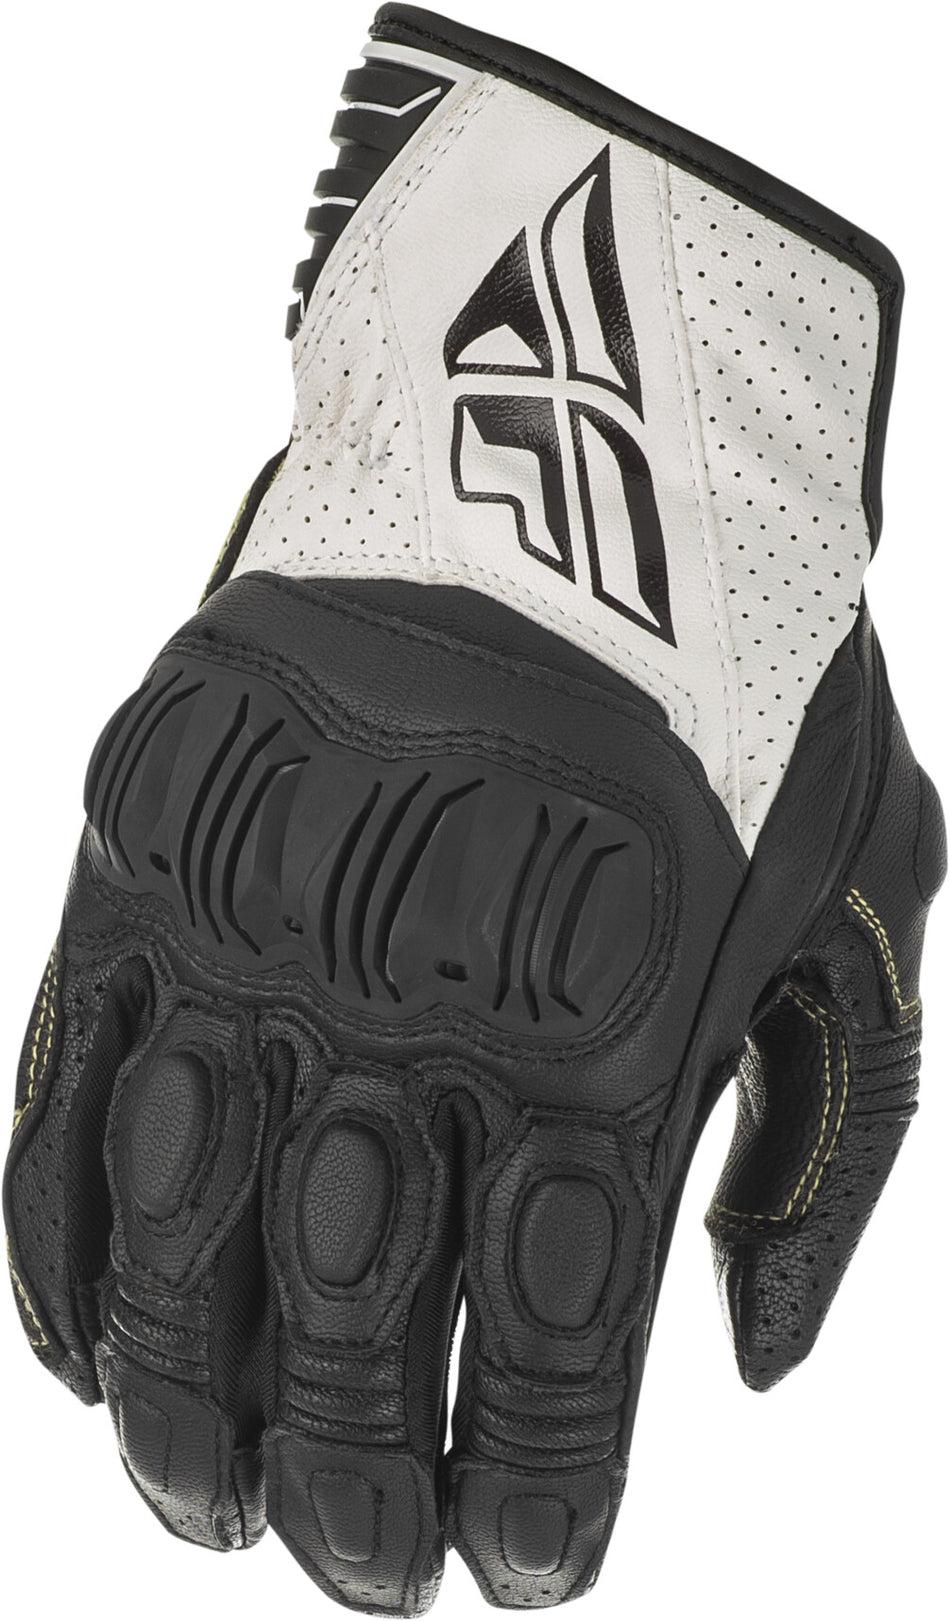 FLY RACING Brawler Gloves Black/White Md 476-2093M